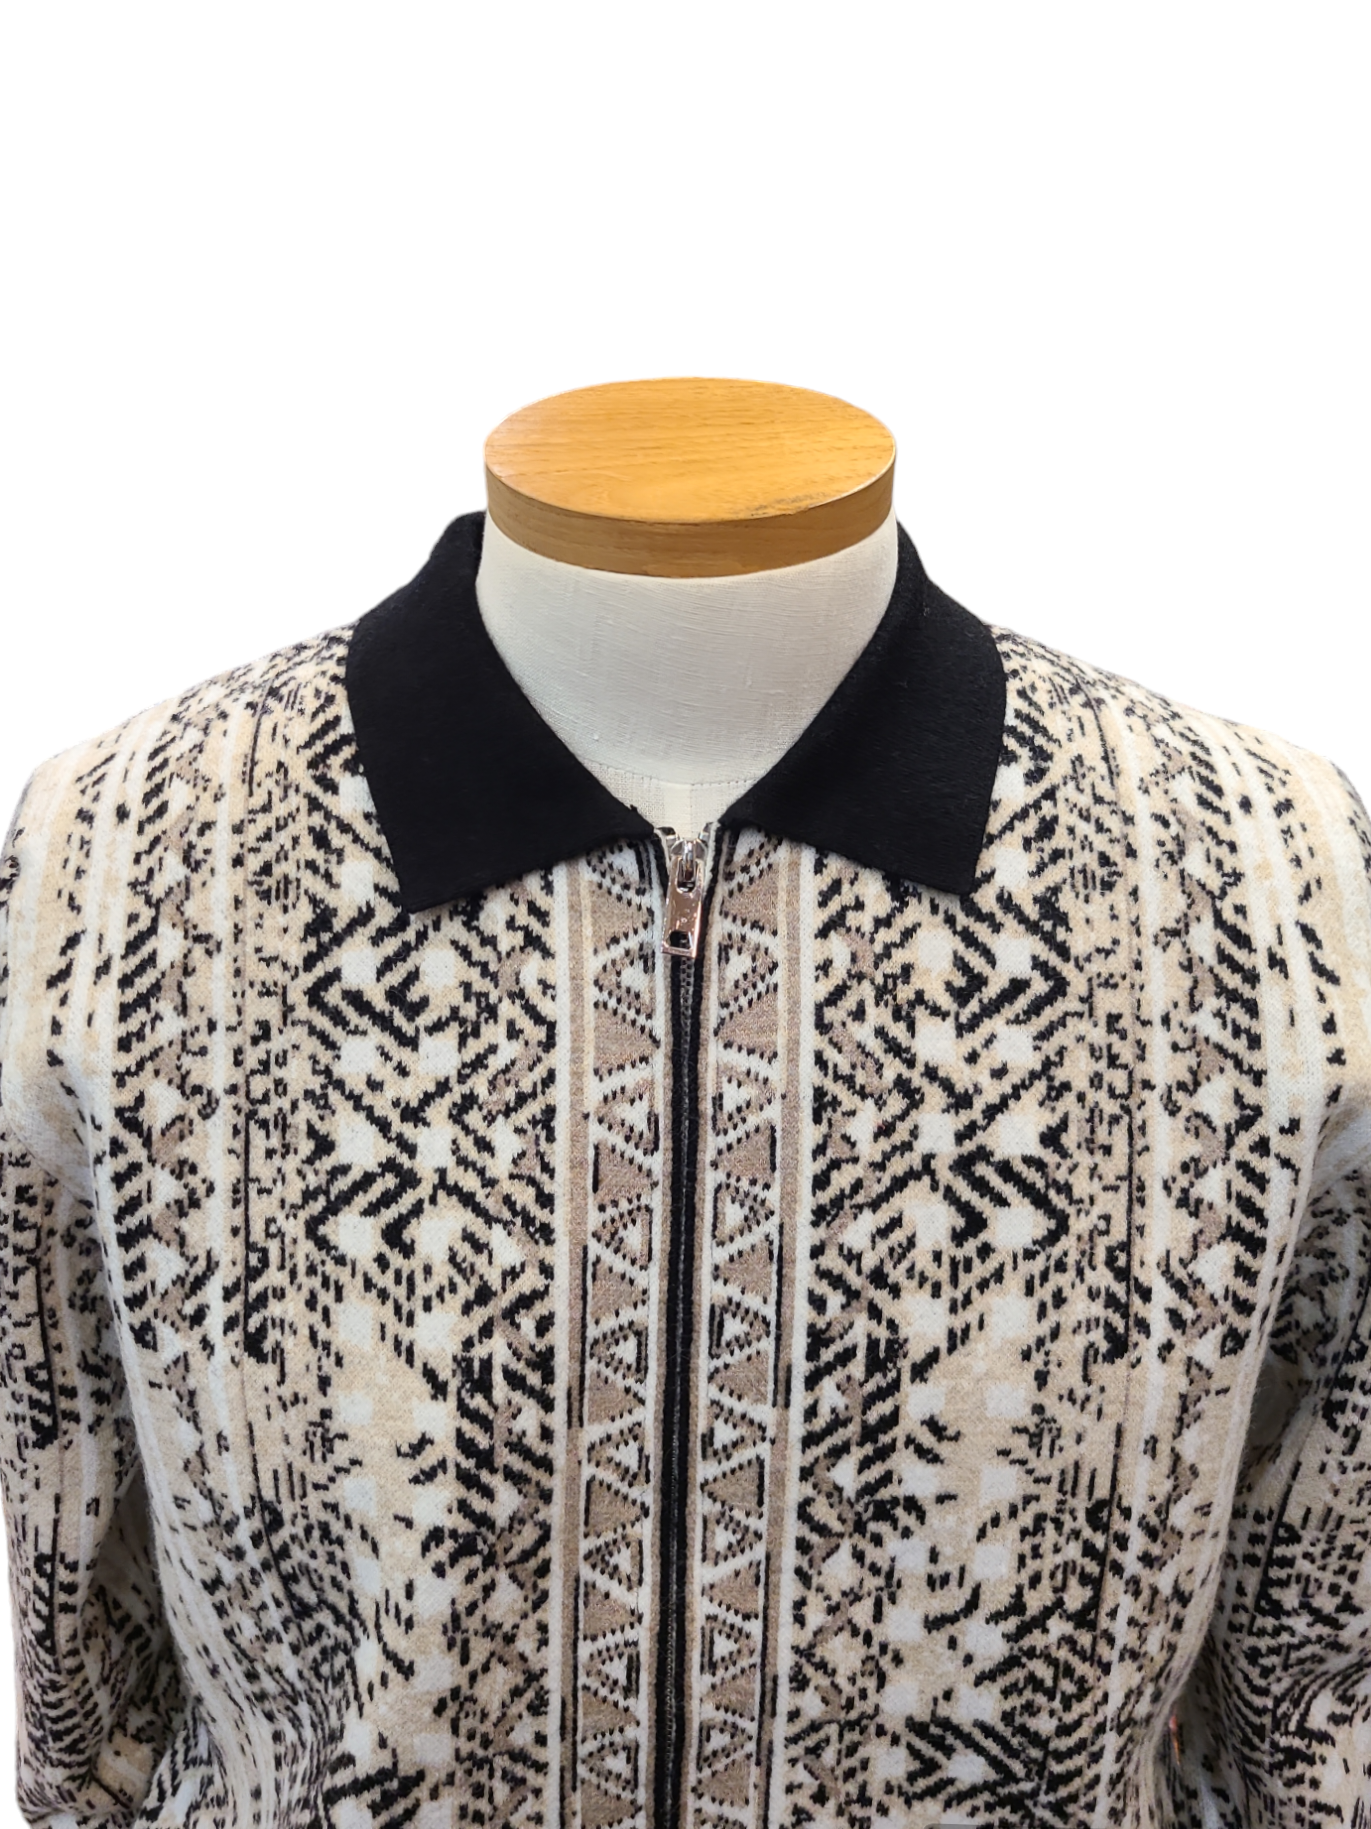 Cigar wool Blend sweater Jacket